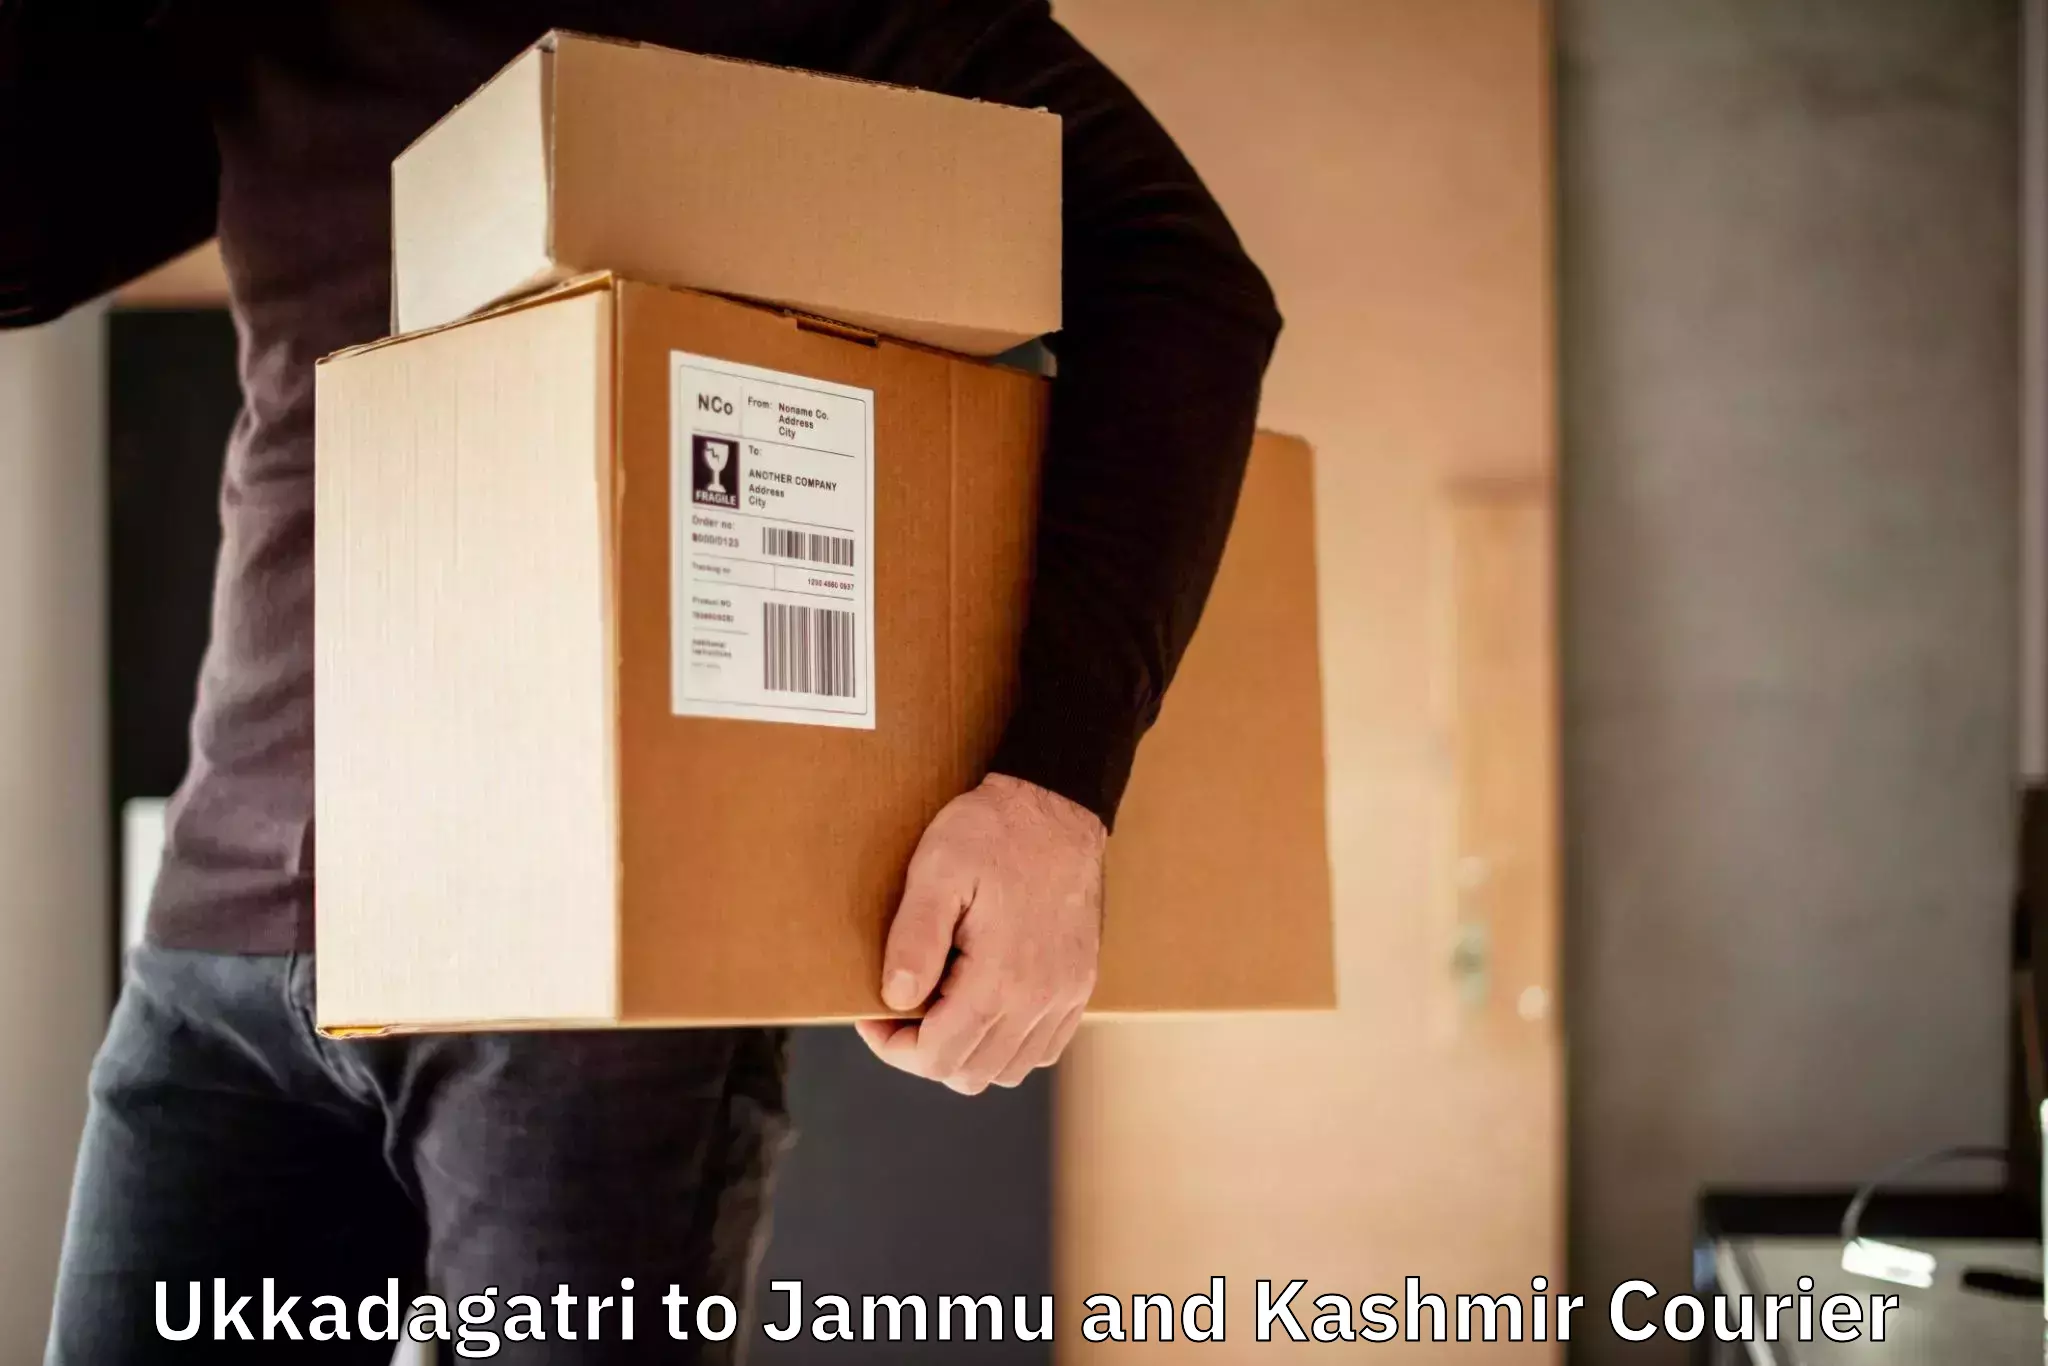 Easy access courier services Ukkadagatri to University of Jammu